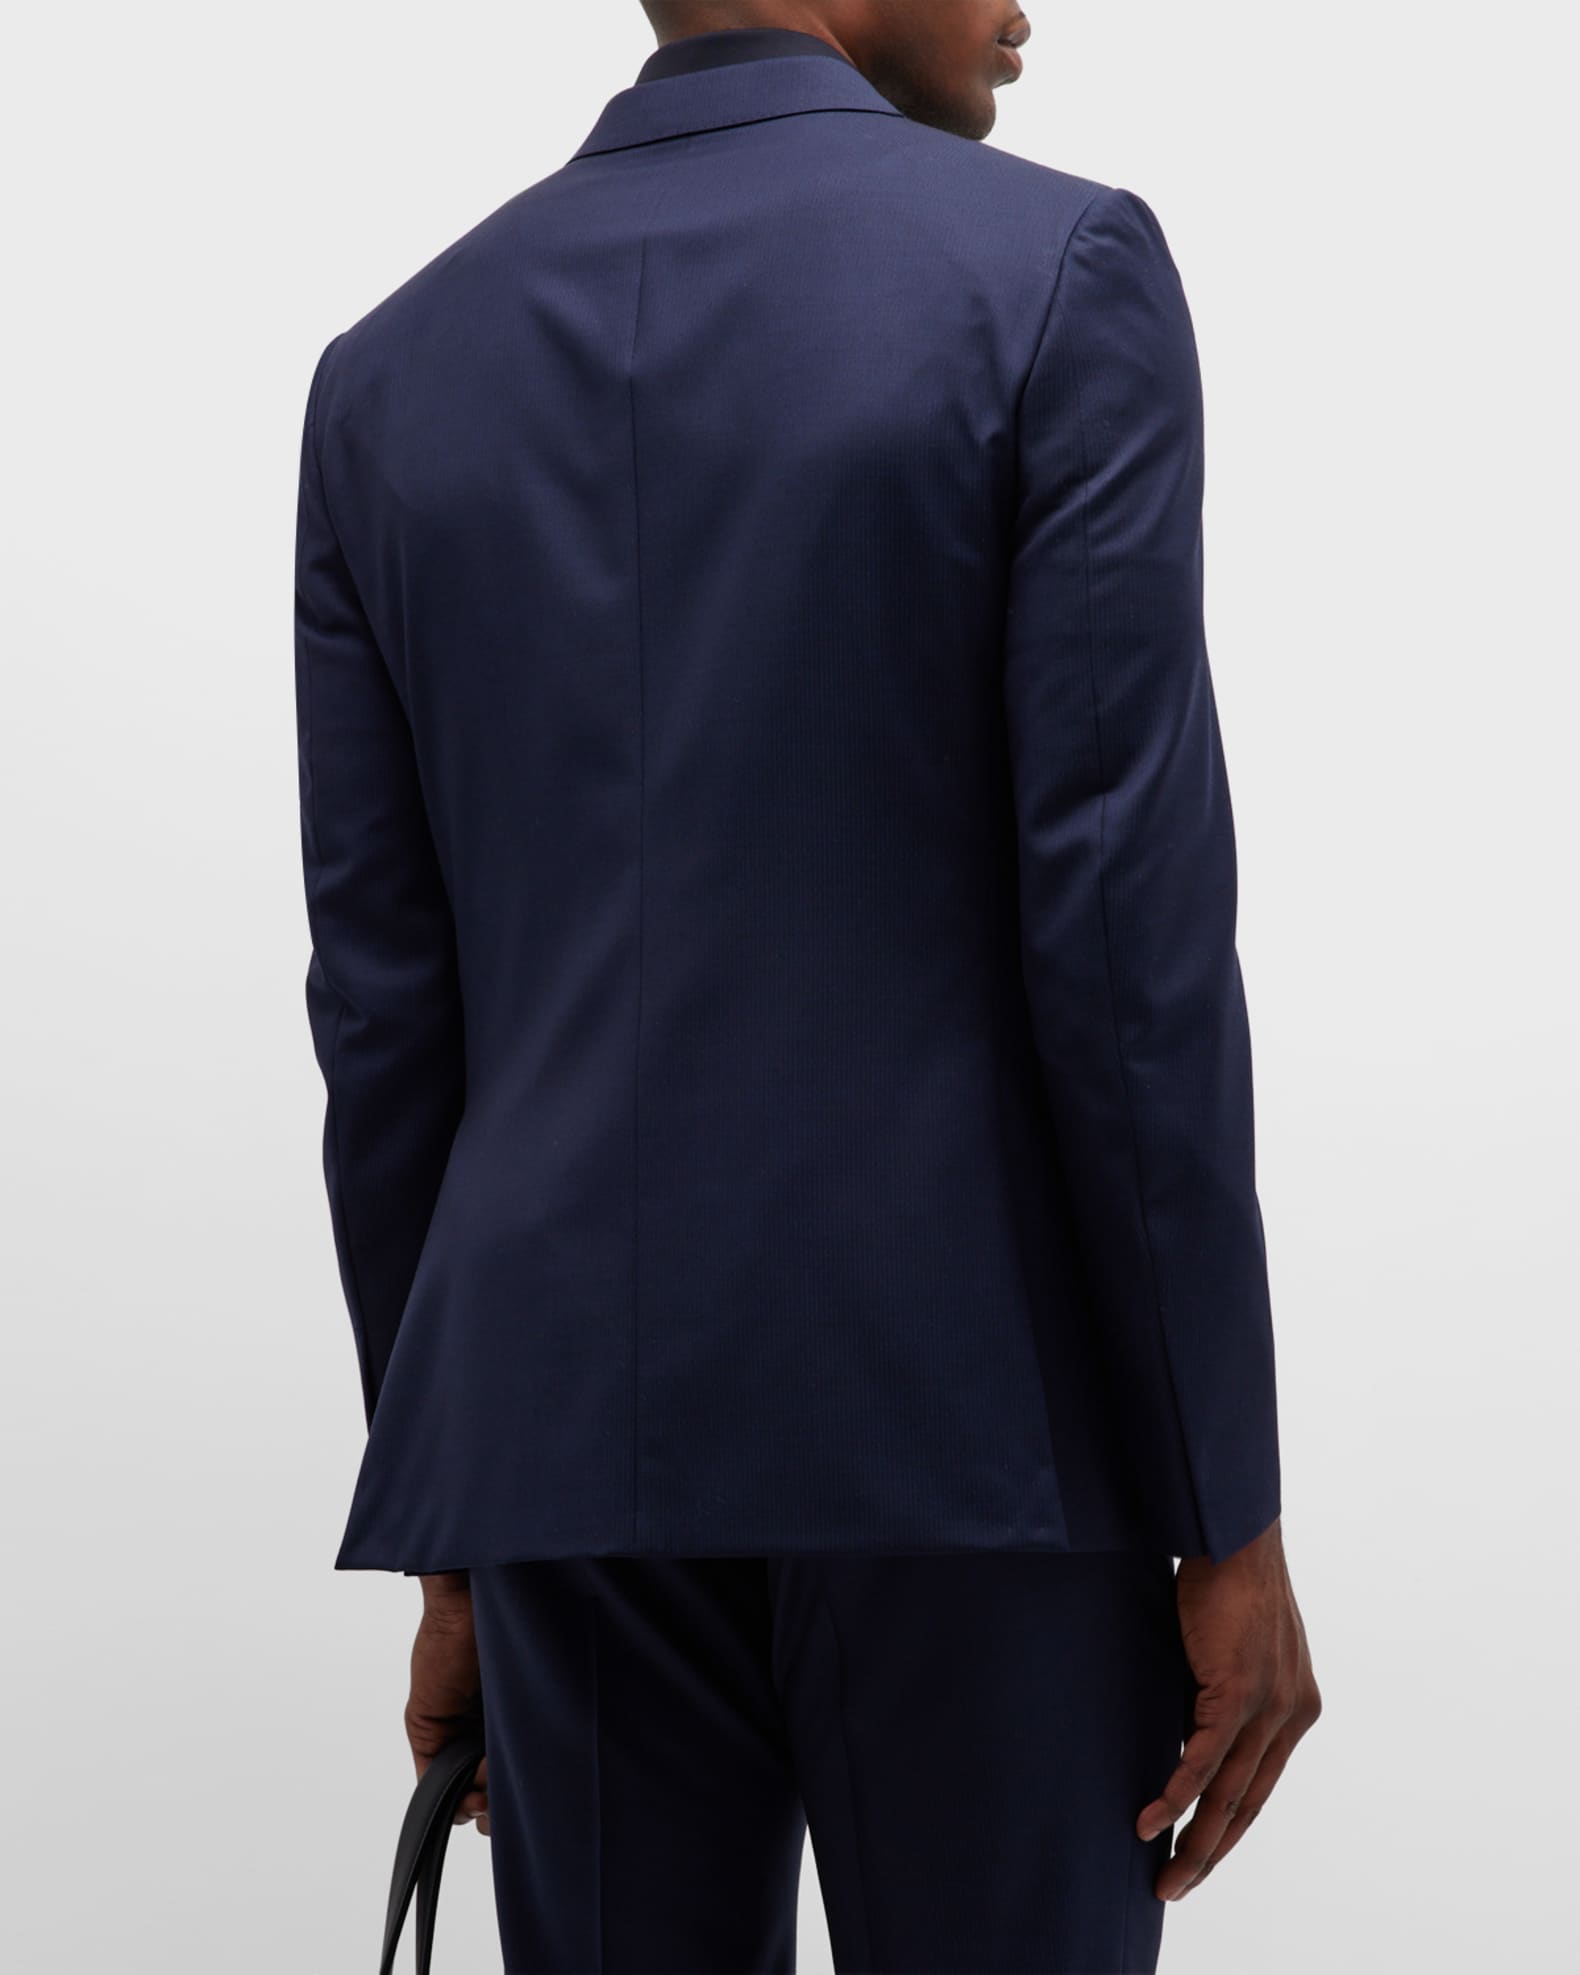 ZEGNA Men's Narrow Tonal Stripe Wool Suit | Neiman Marcus